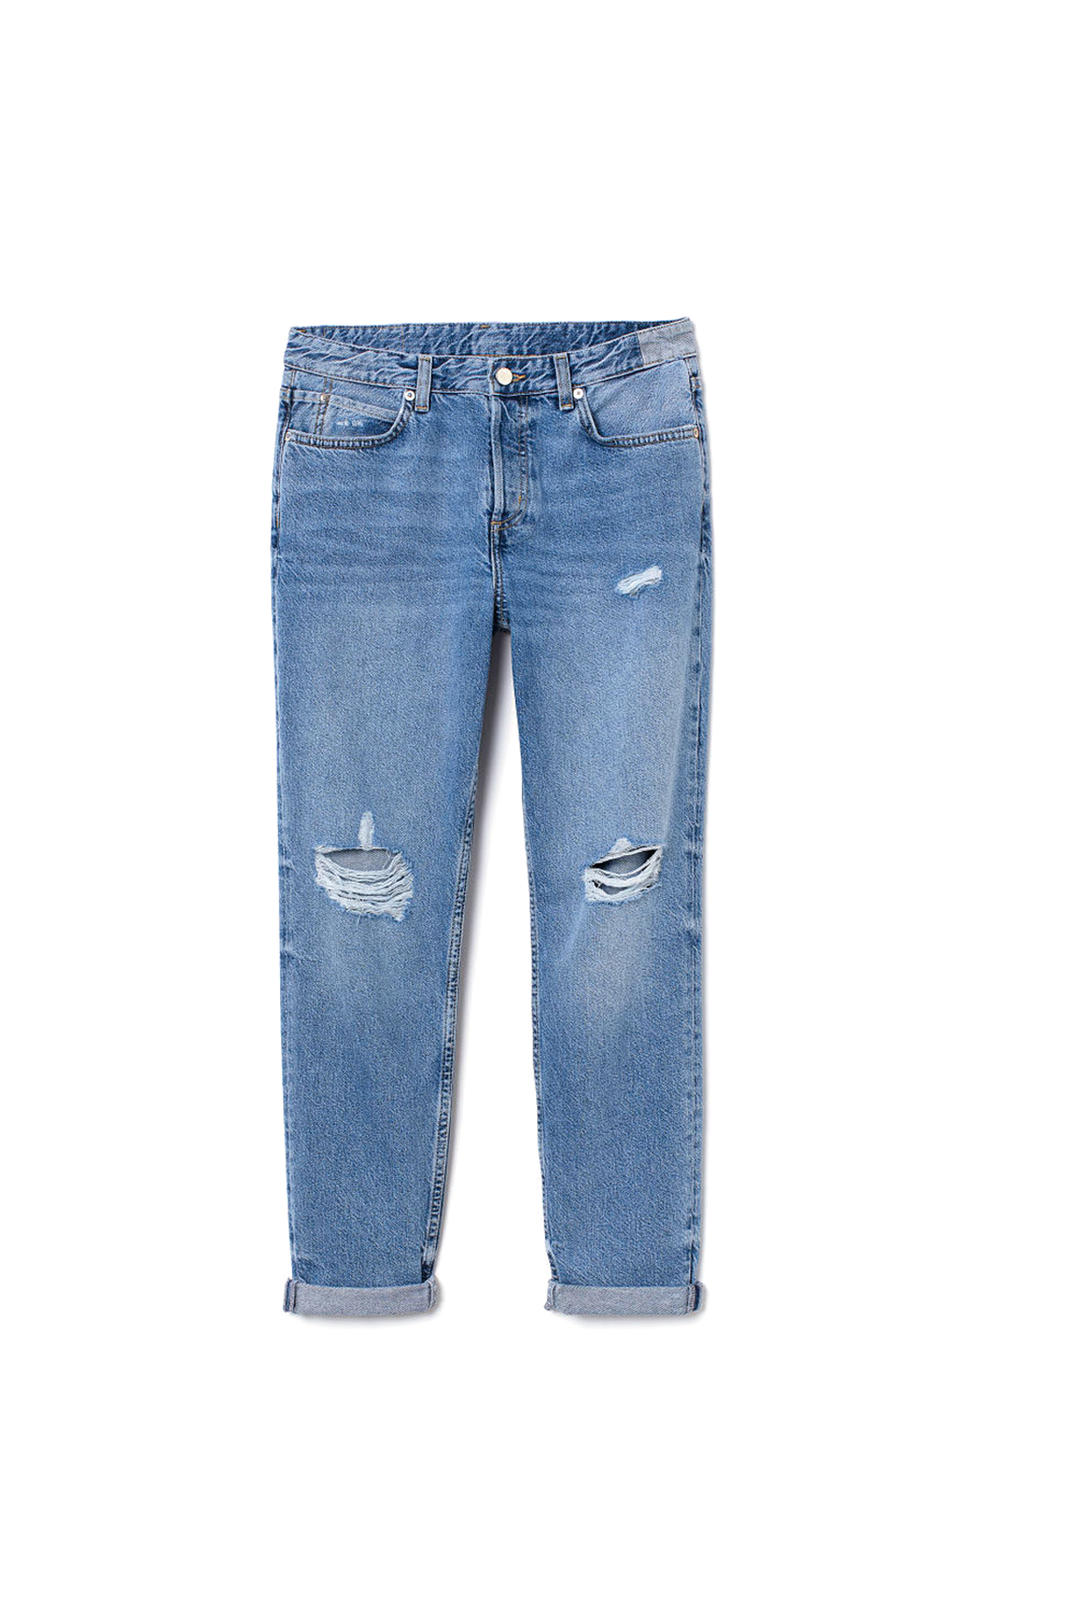 Boyfriend-Low-Jeans,-H&M,-€29.99